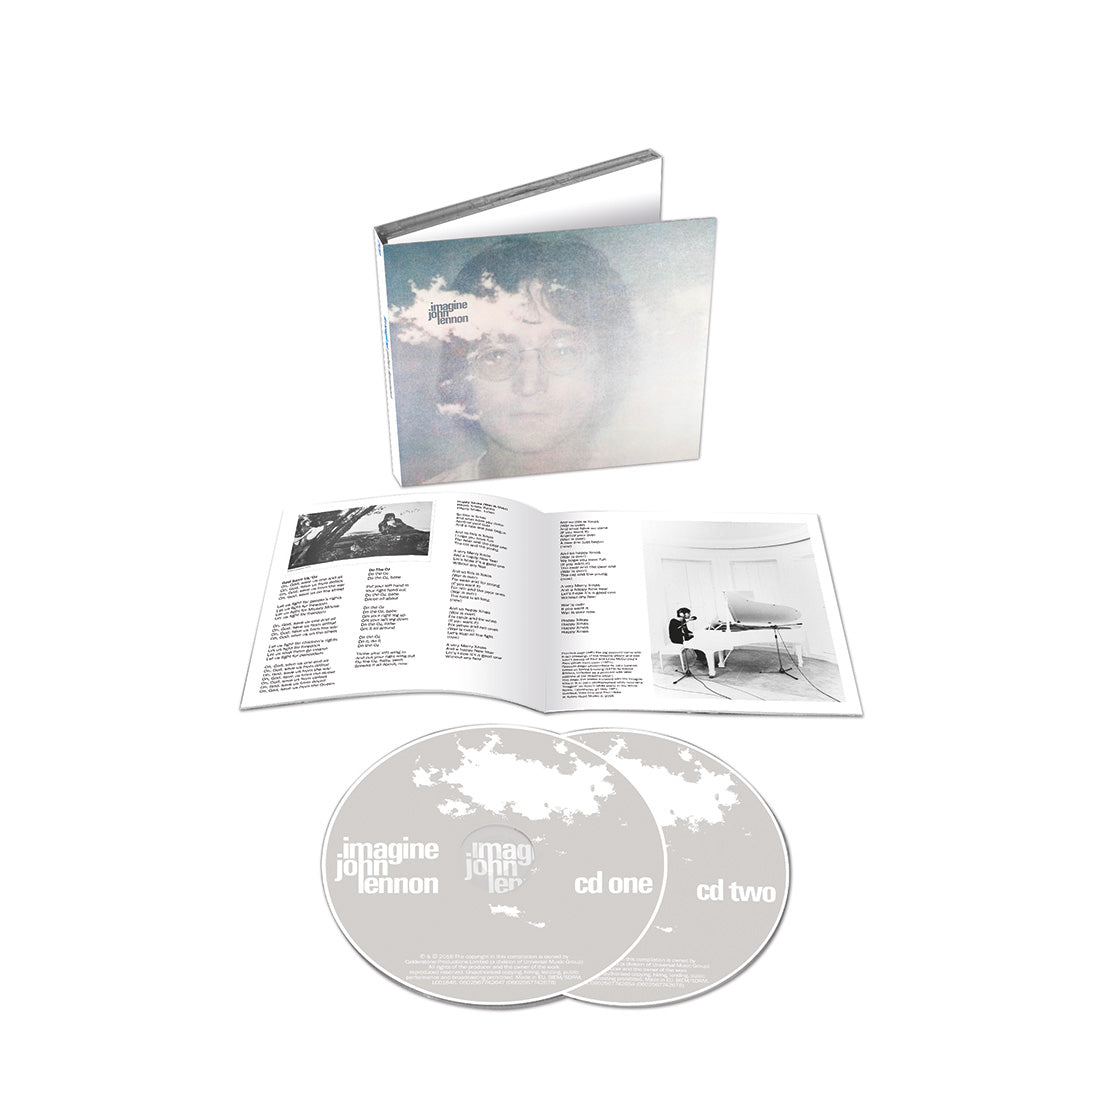 John Lennon, Yoko Ono - Imagine - The Ultimate Collection: Deluxe Edition 2CD